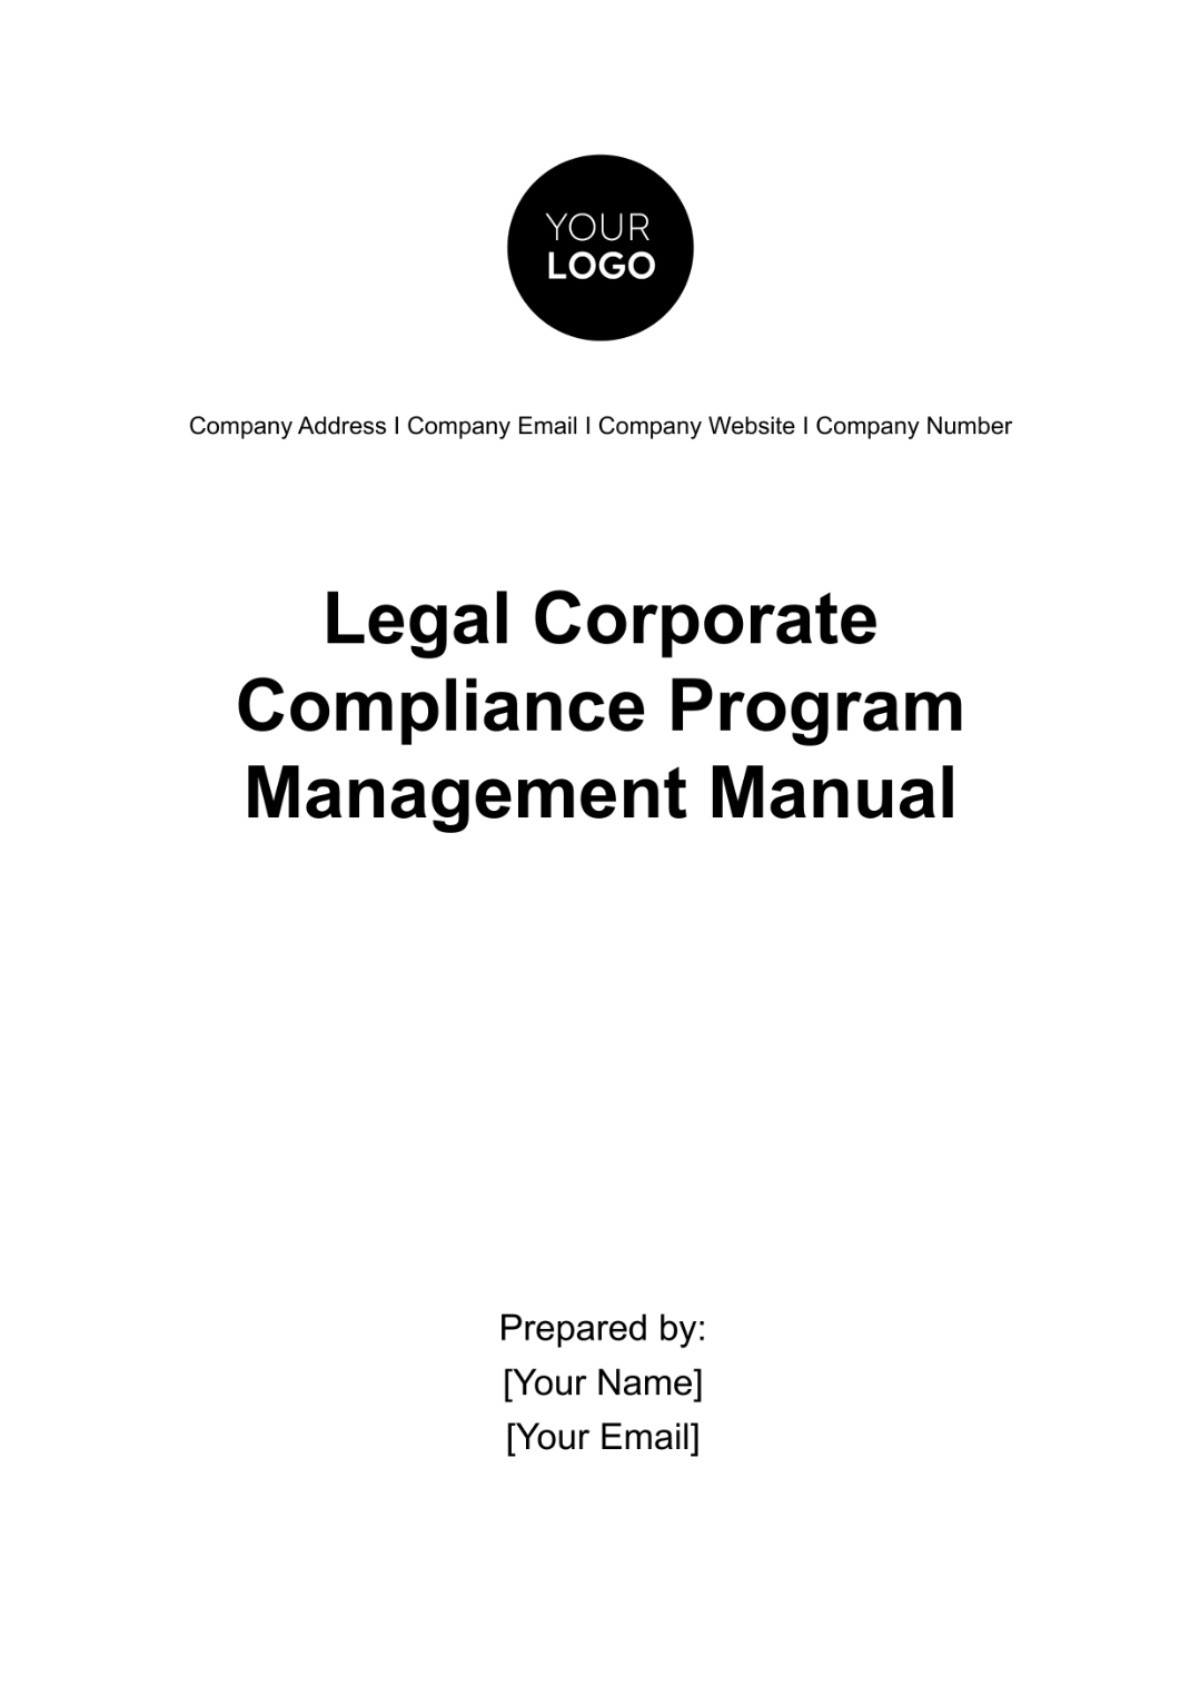 Legal Corporate Compliance Program Management Manual Template